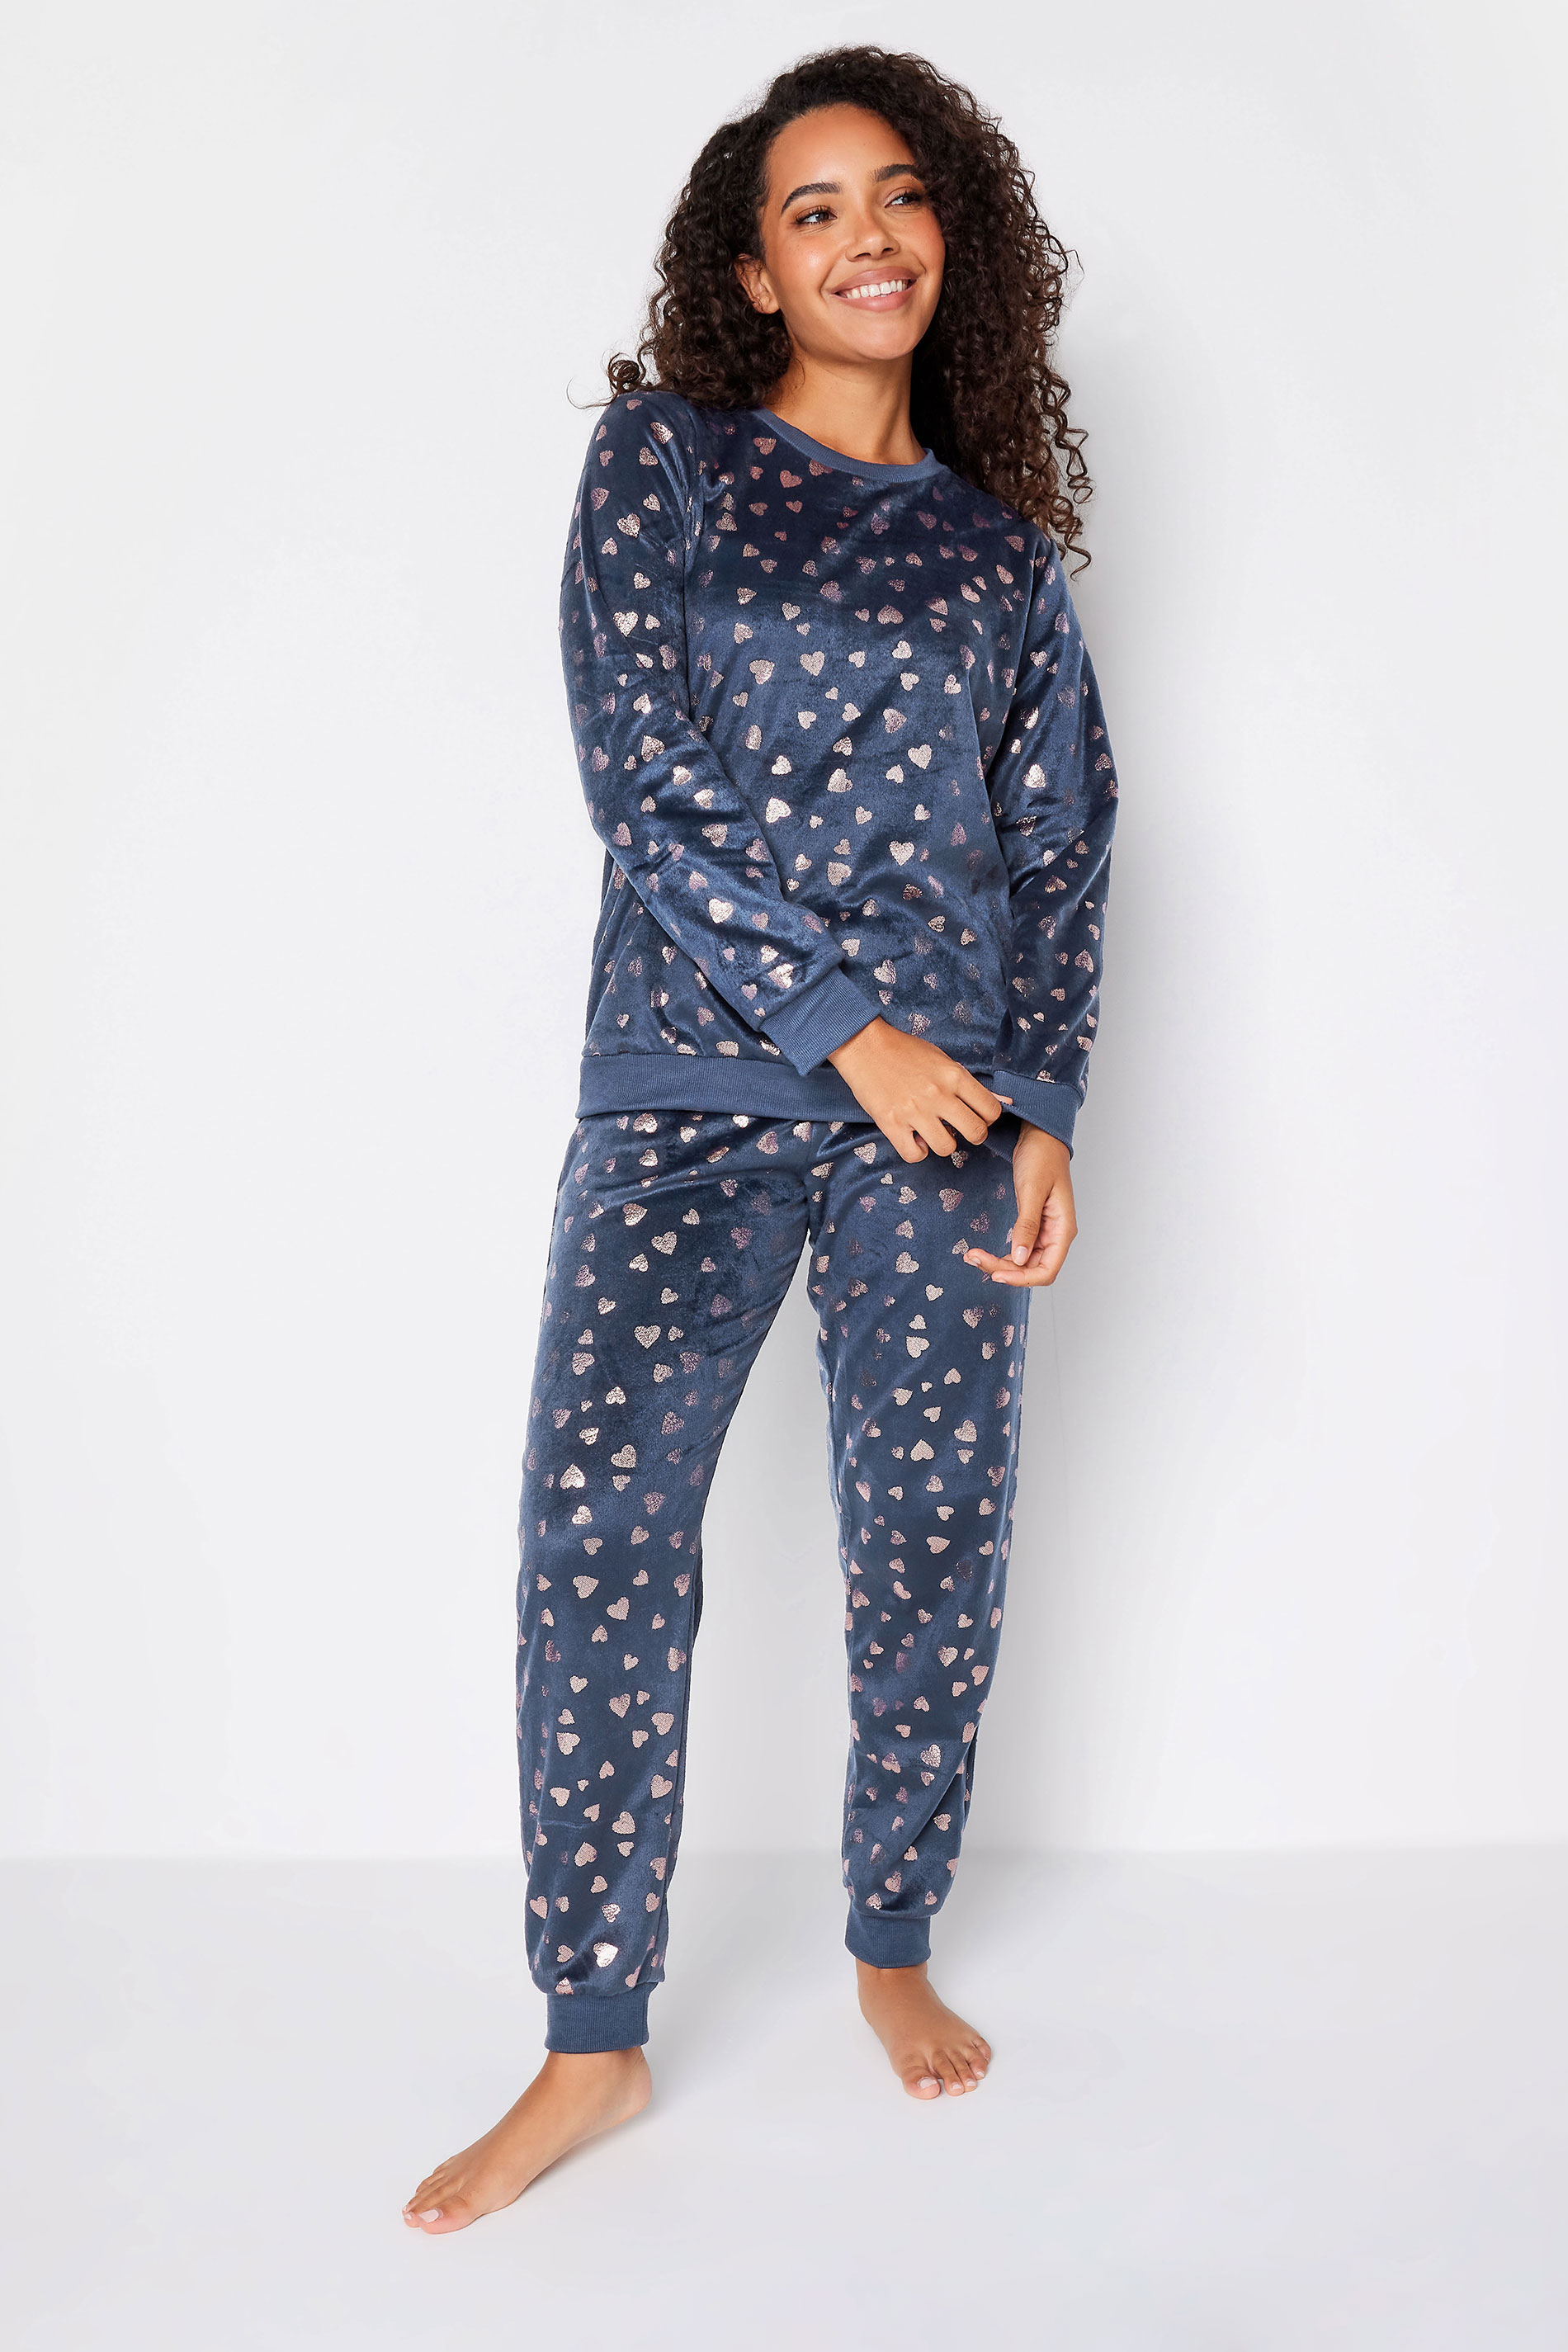 M&Co Blue Foil Heart Print Fleece Pyjama Lounge Set | M&Co 2